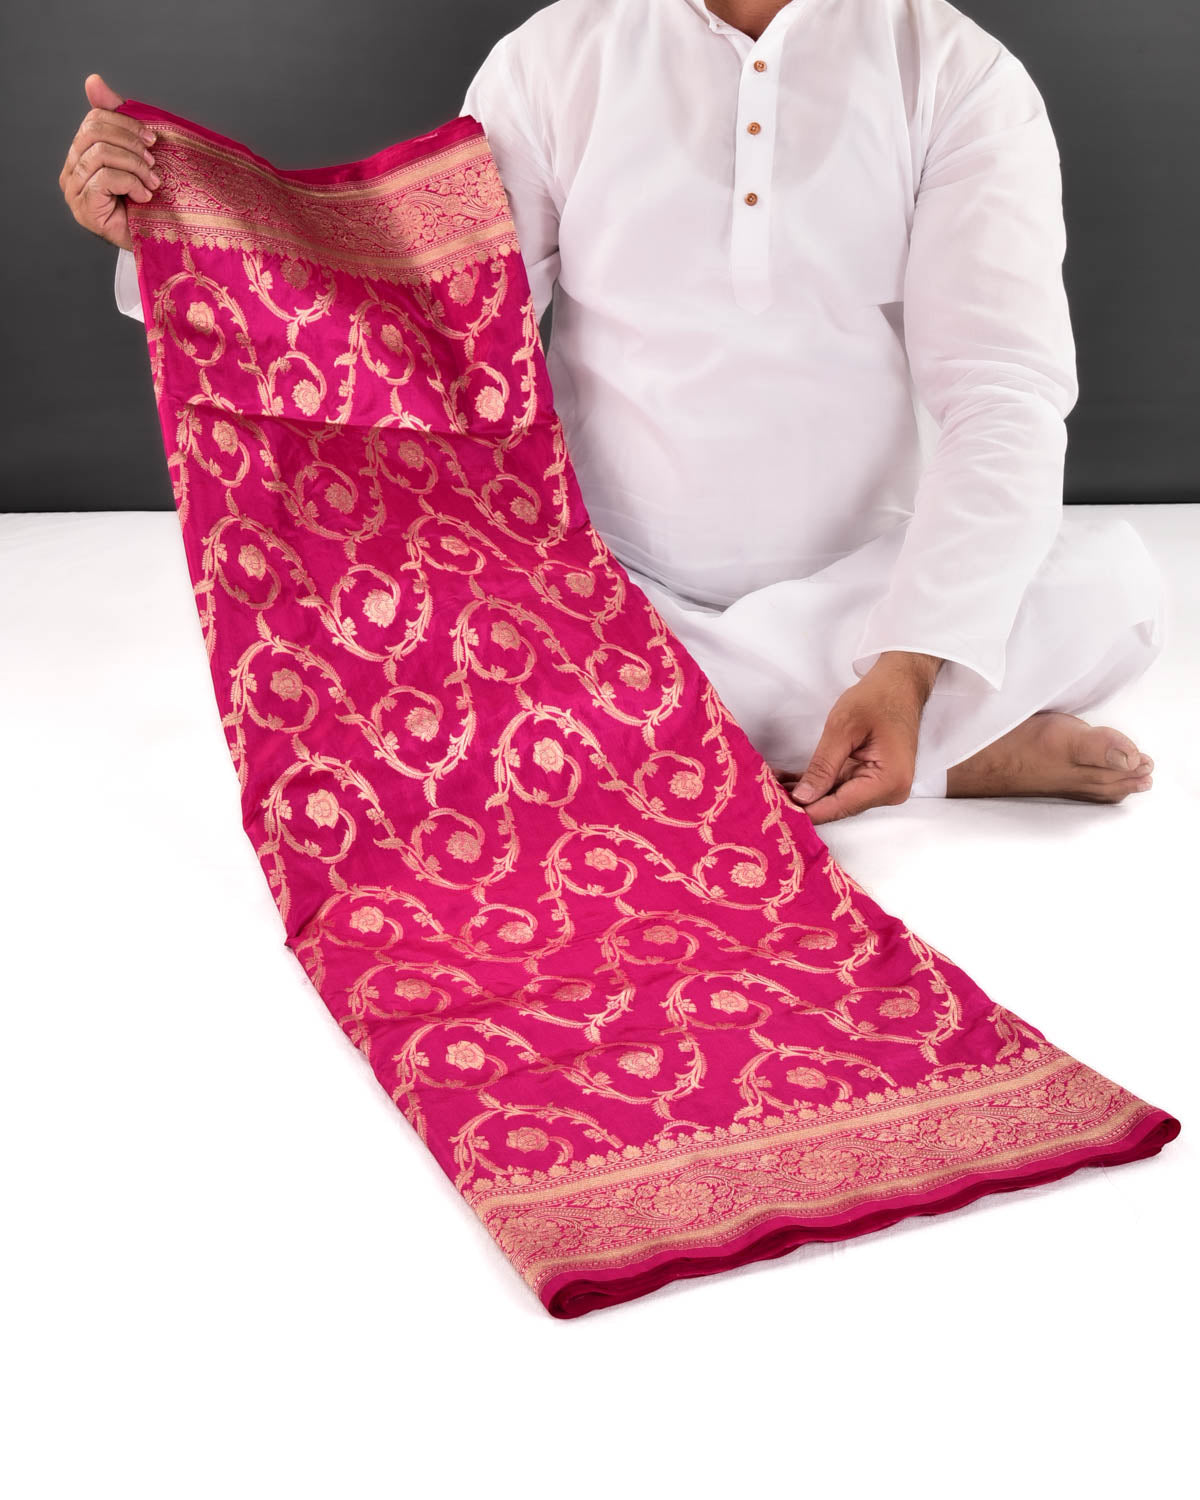 Rani Pink Banarasi Gold Zari Floral Jaal Cutwork Brocade Handwoven Katan Silk Saree - By HolyWeaves, Benares